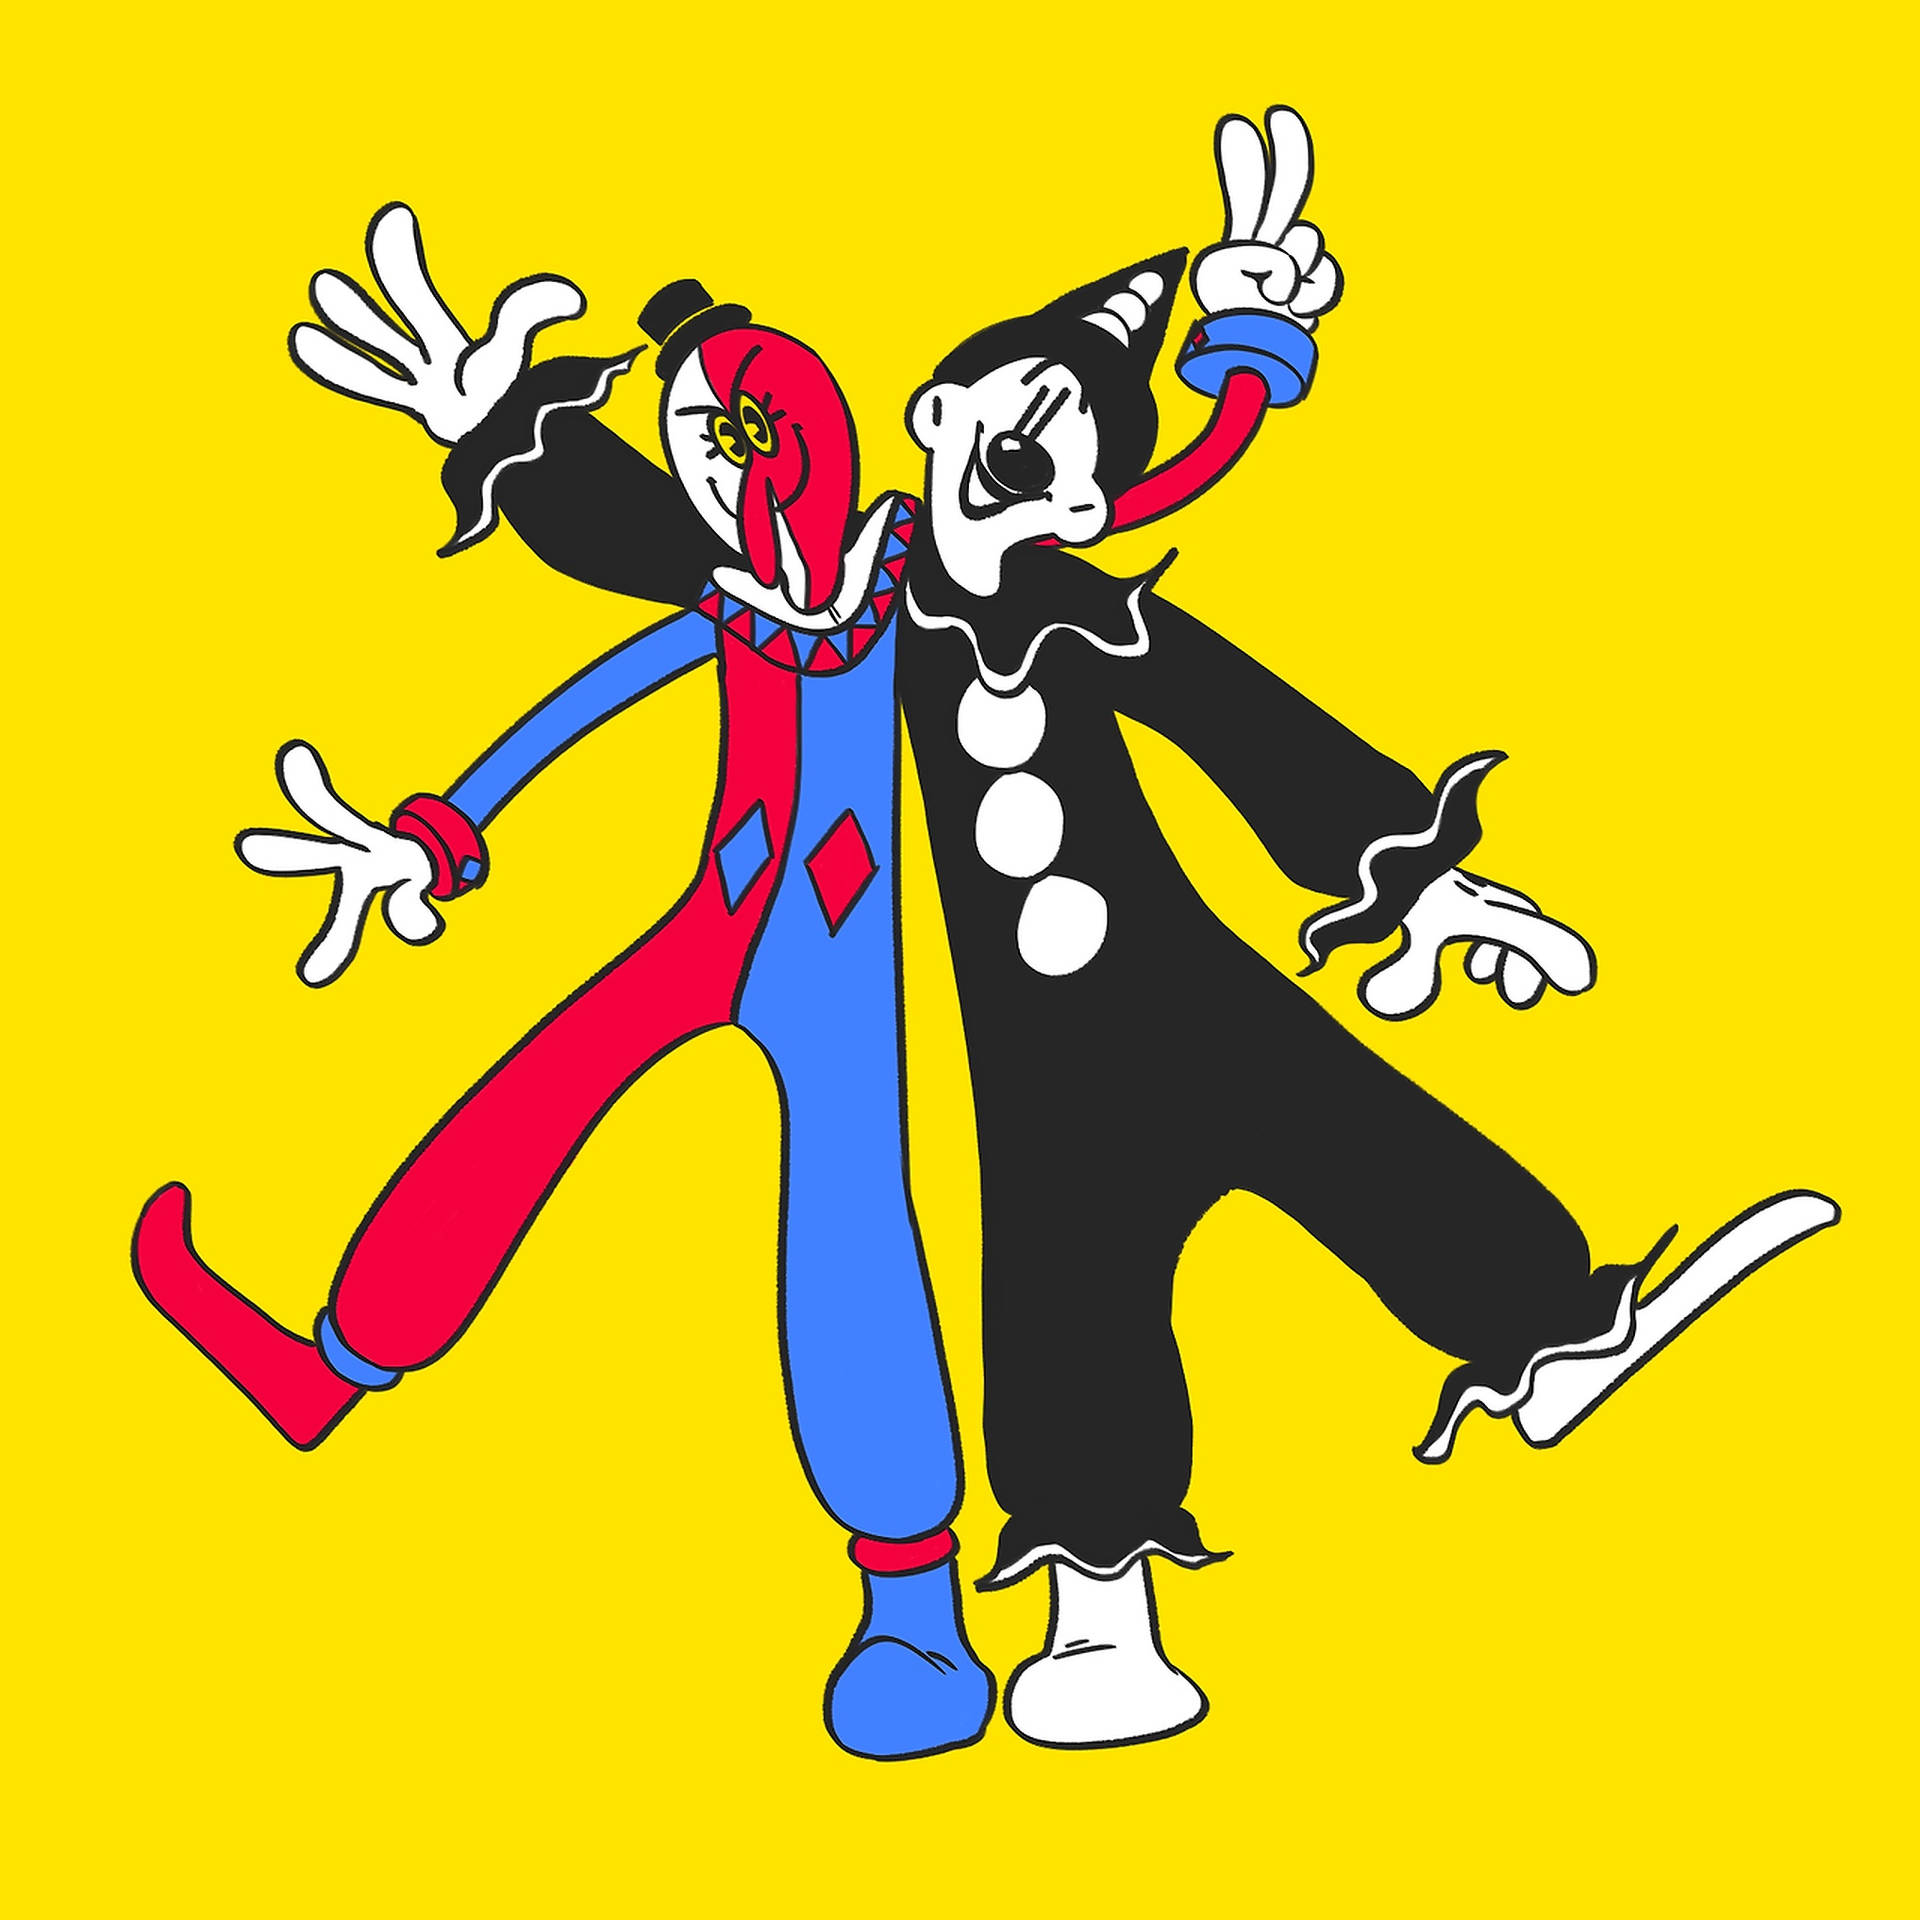 Two Cartoon Clowns